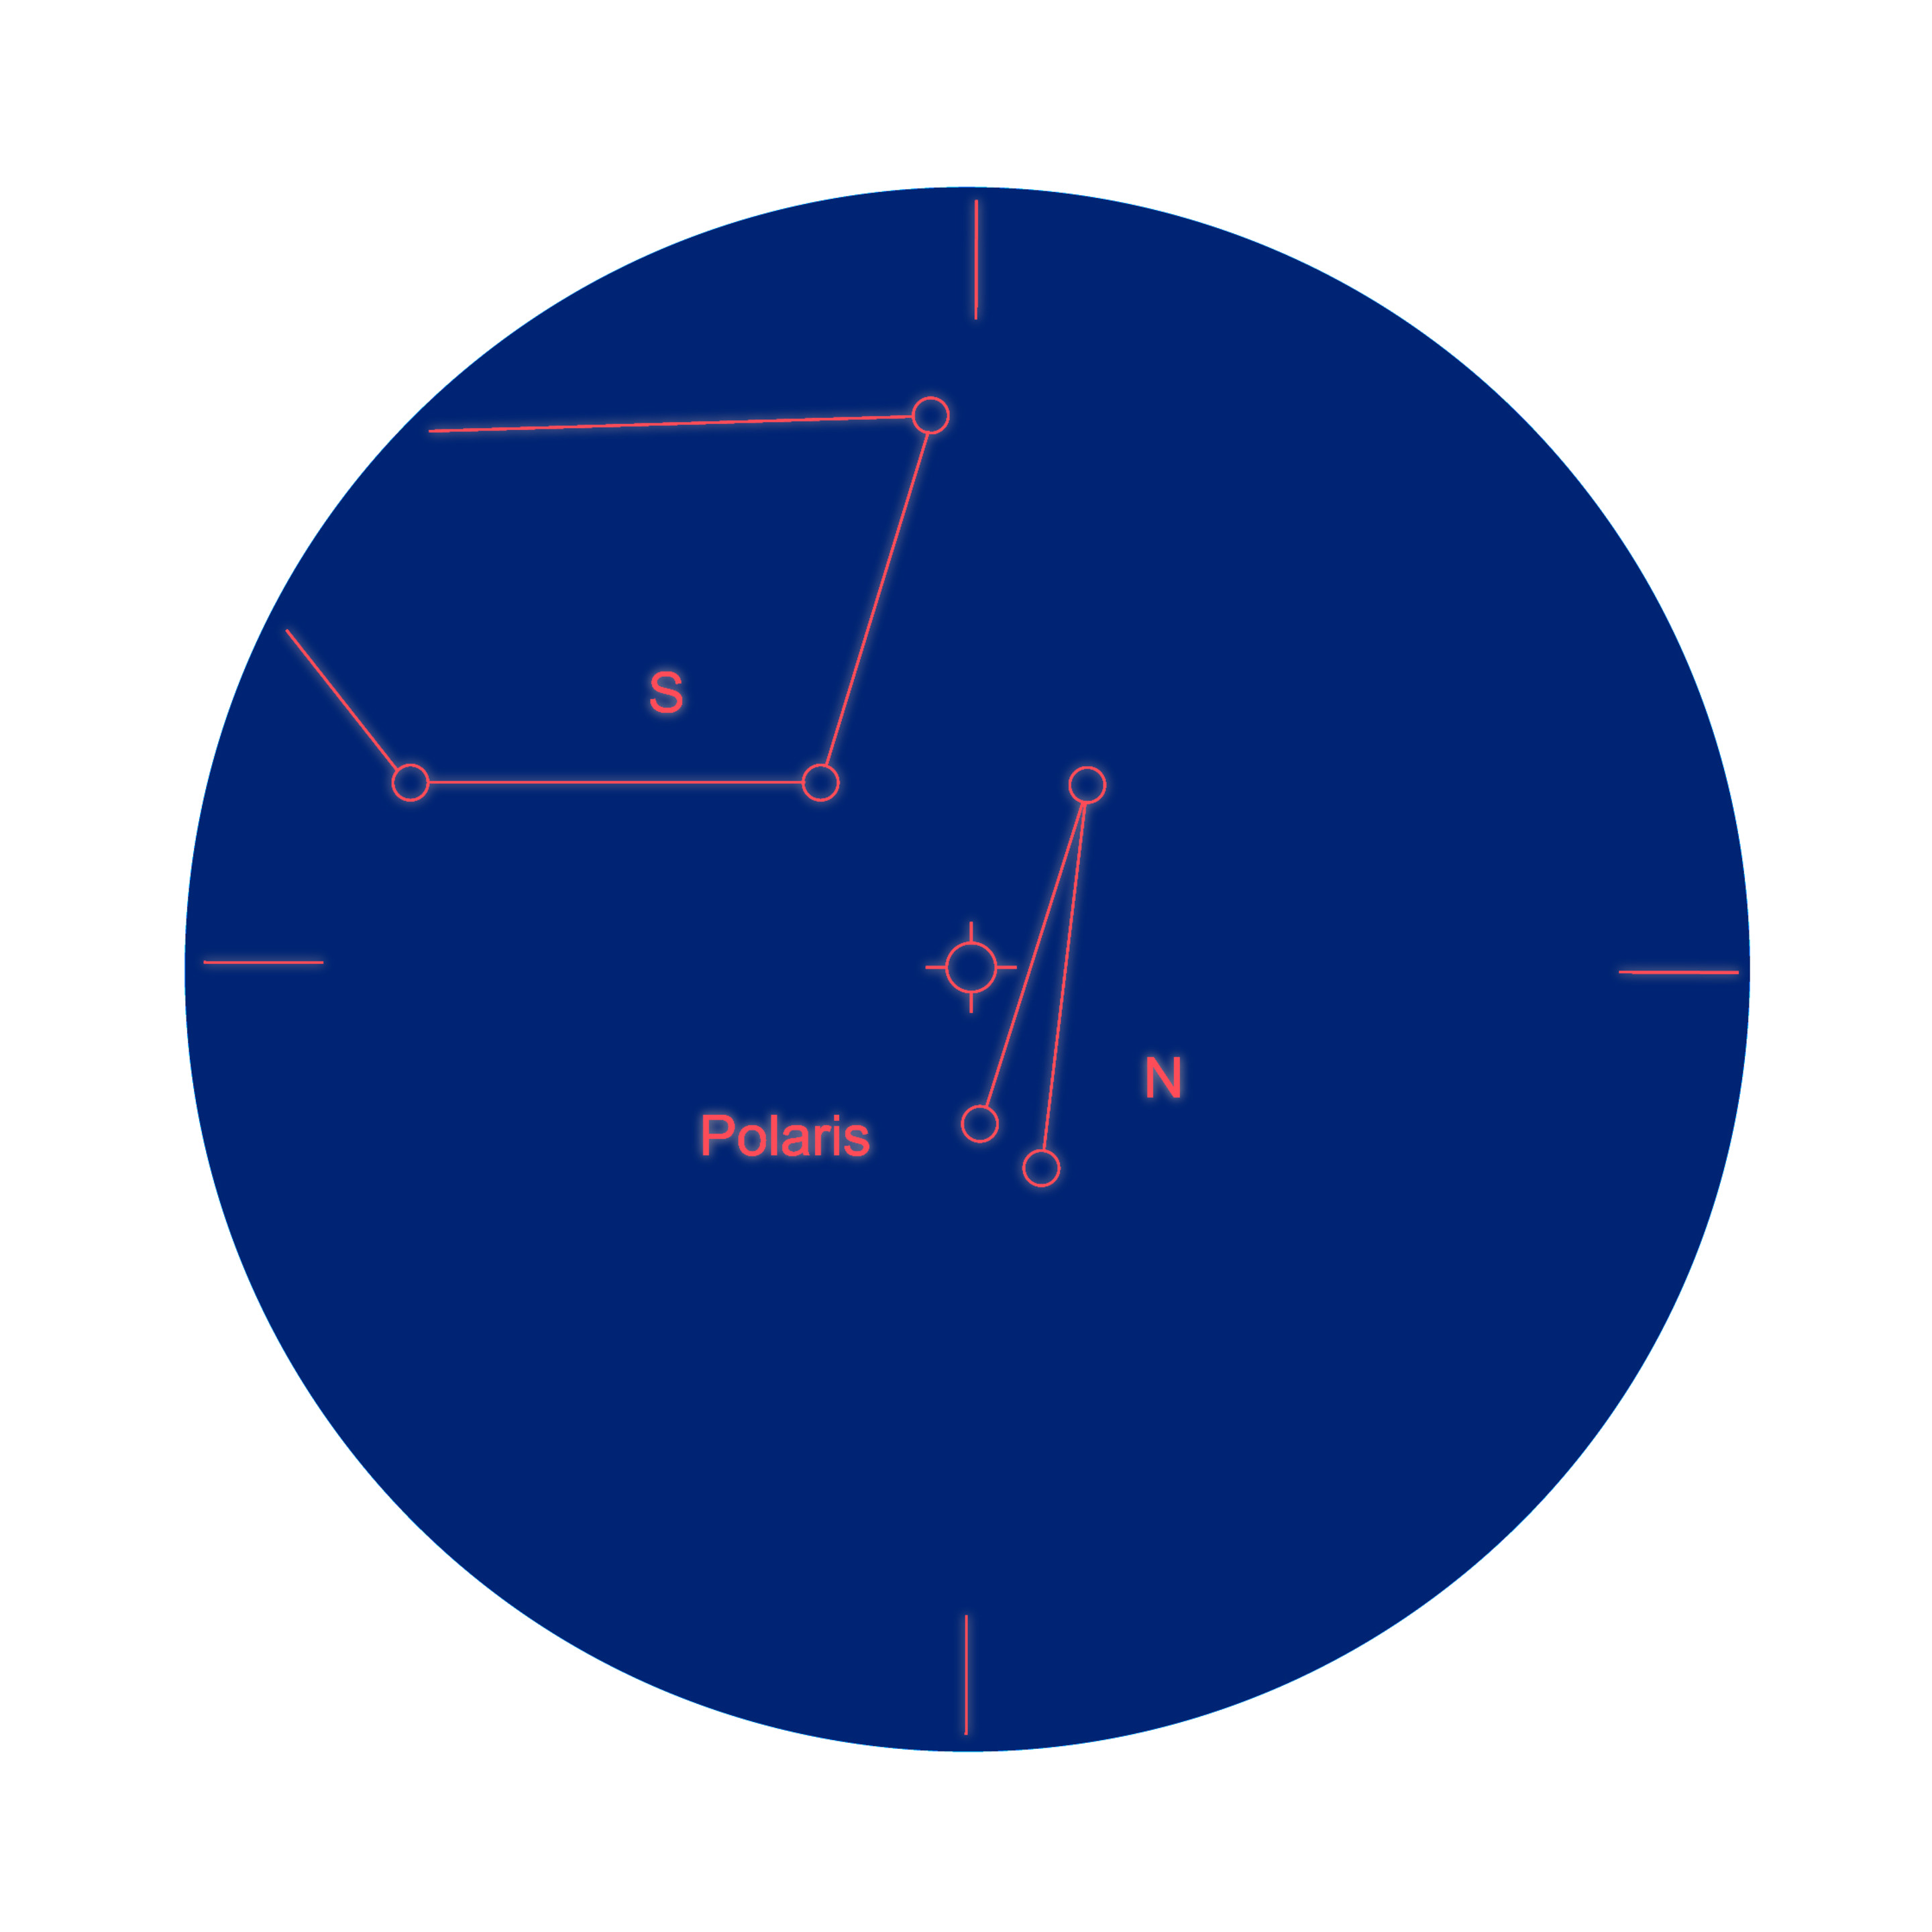 Polar+amici-prisma Explorar Científico 8x50 90 ° 90 ° 90 ° 90 ° 90 °